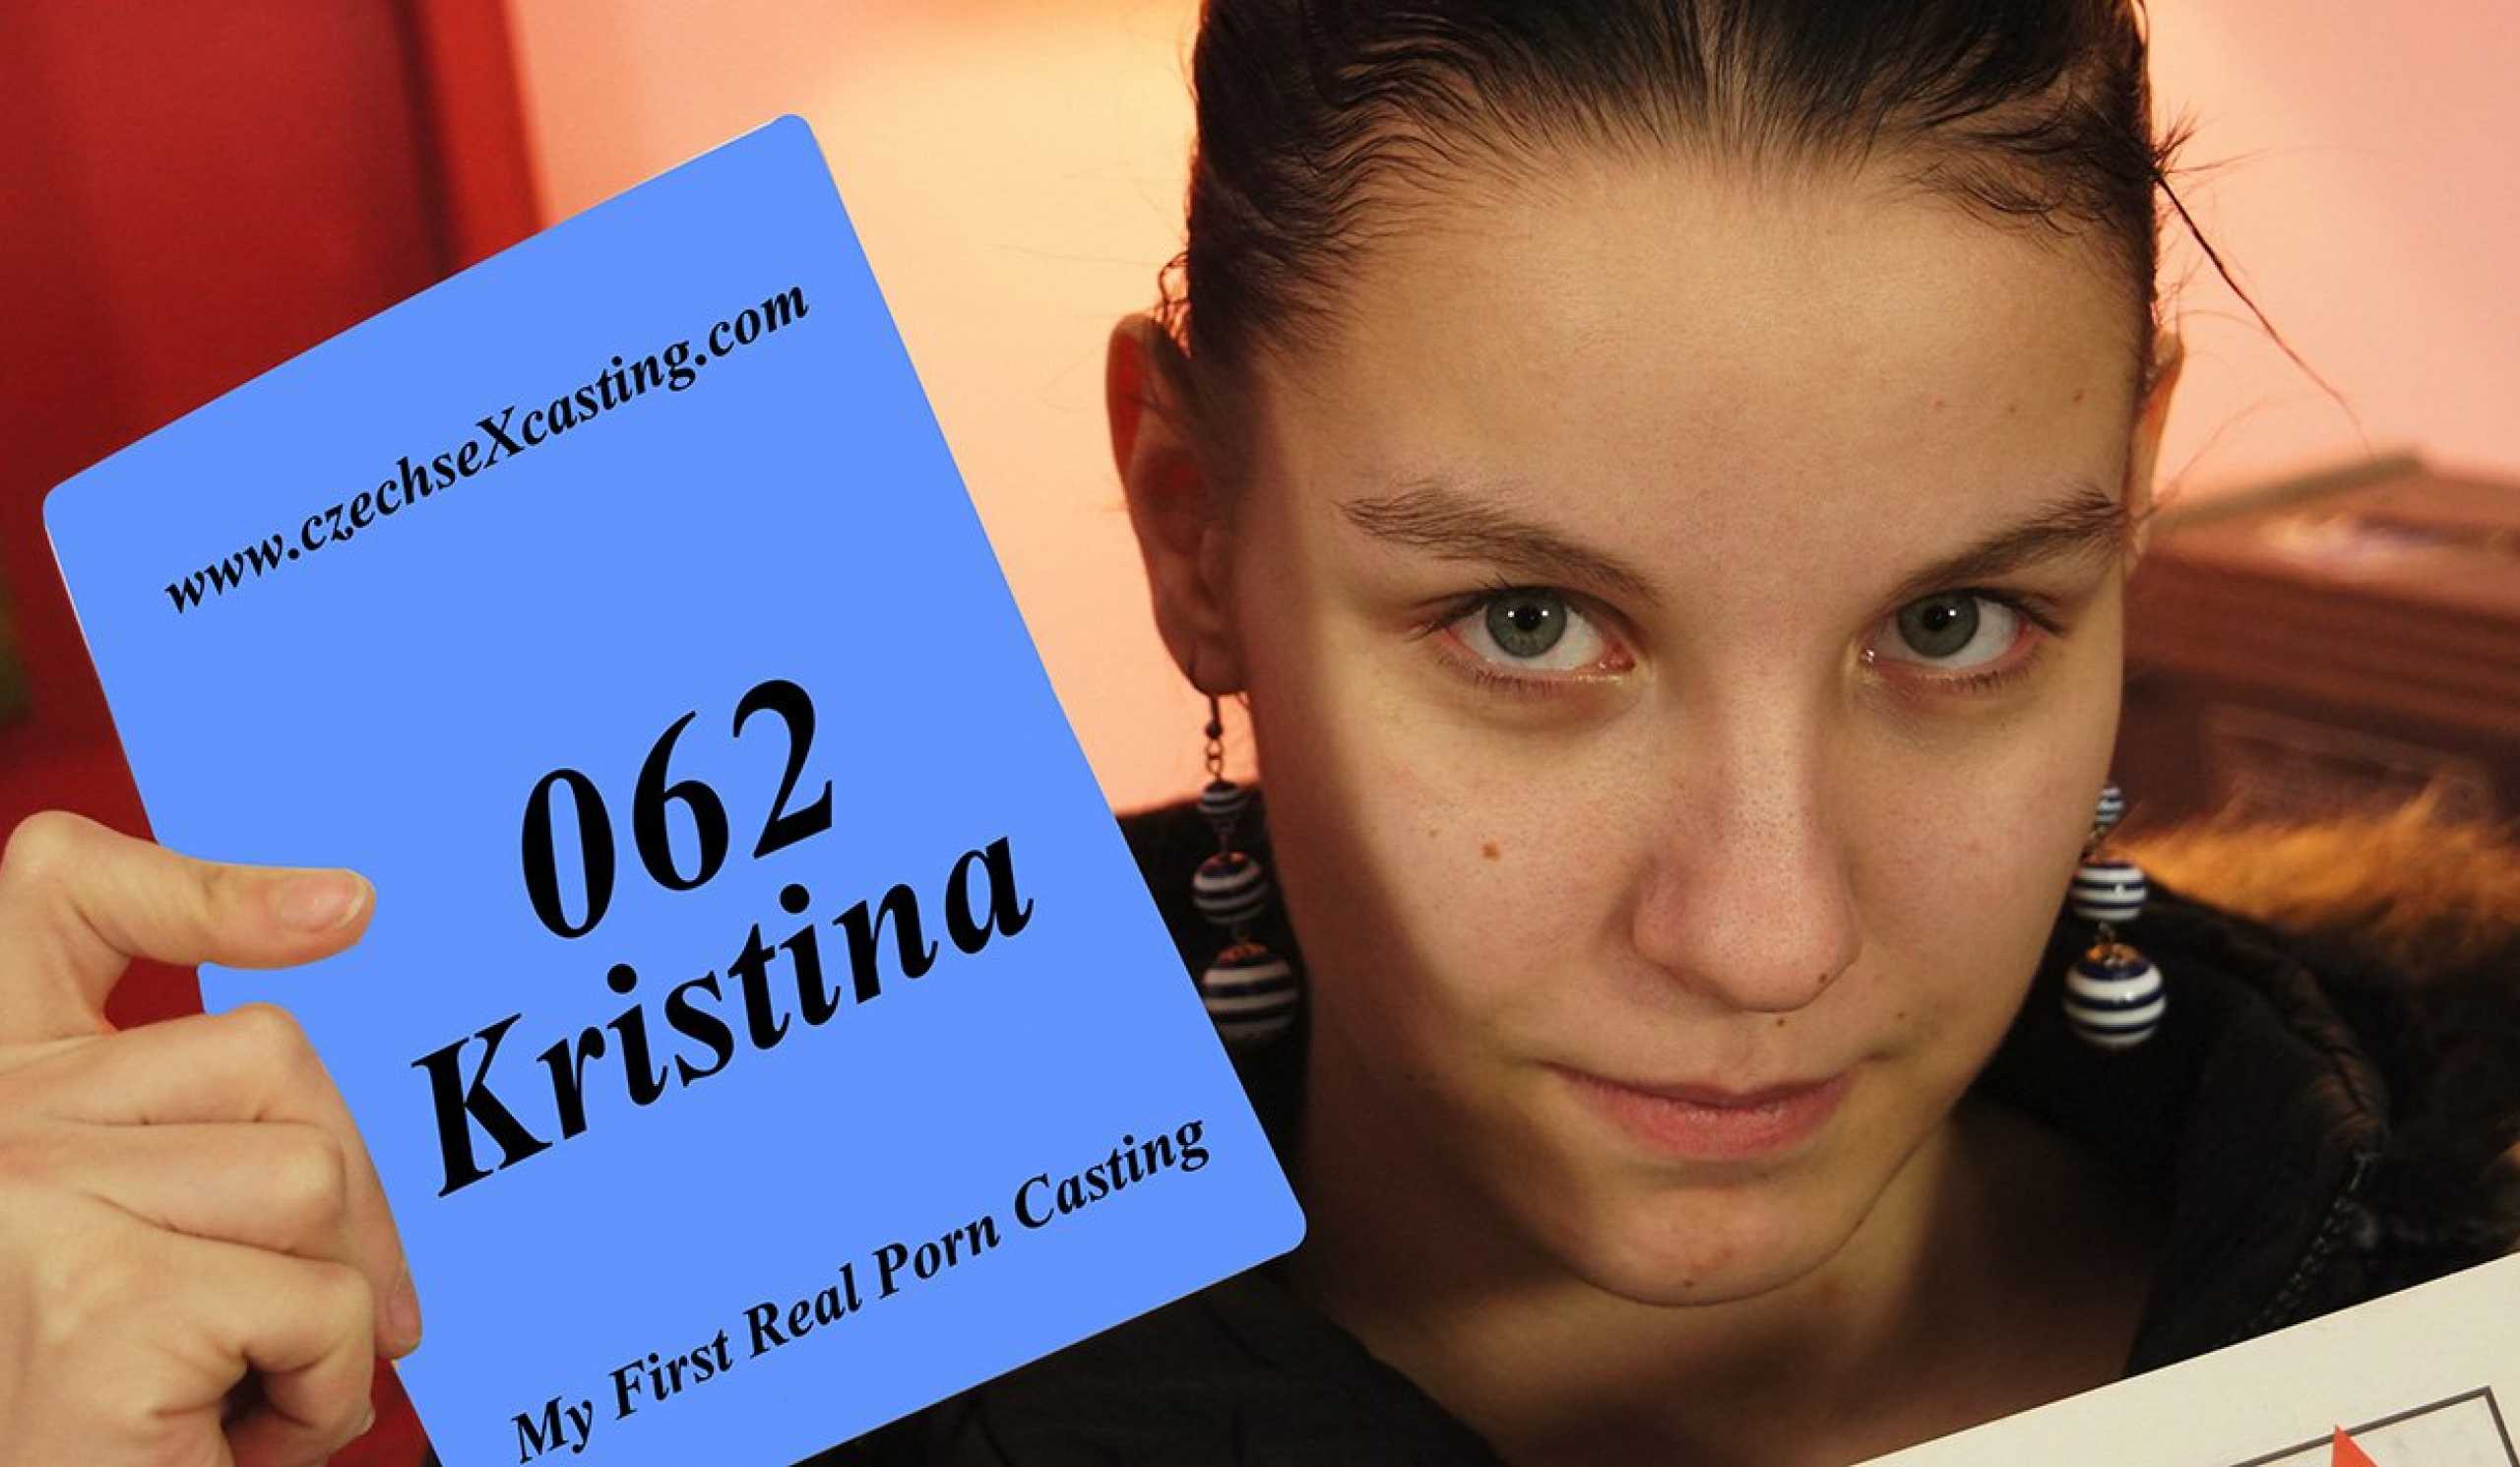 Czech First Casting - Shy Kristina at her first porn casting | Czech Sex Casting